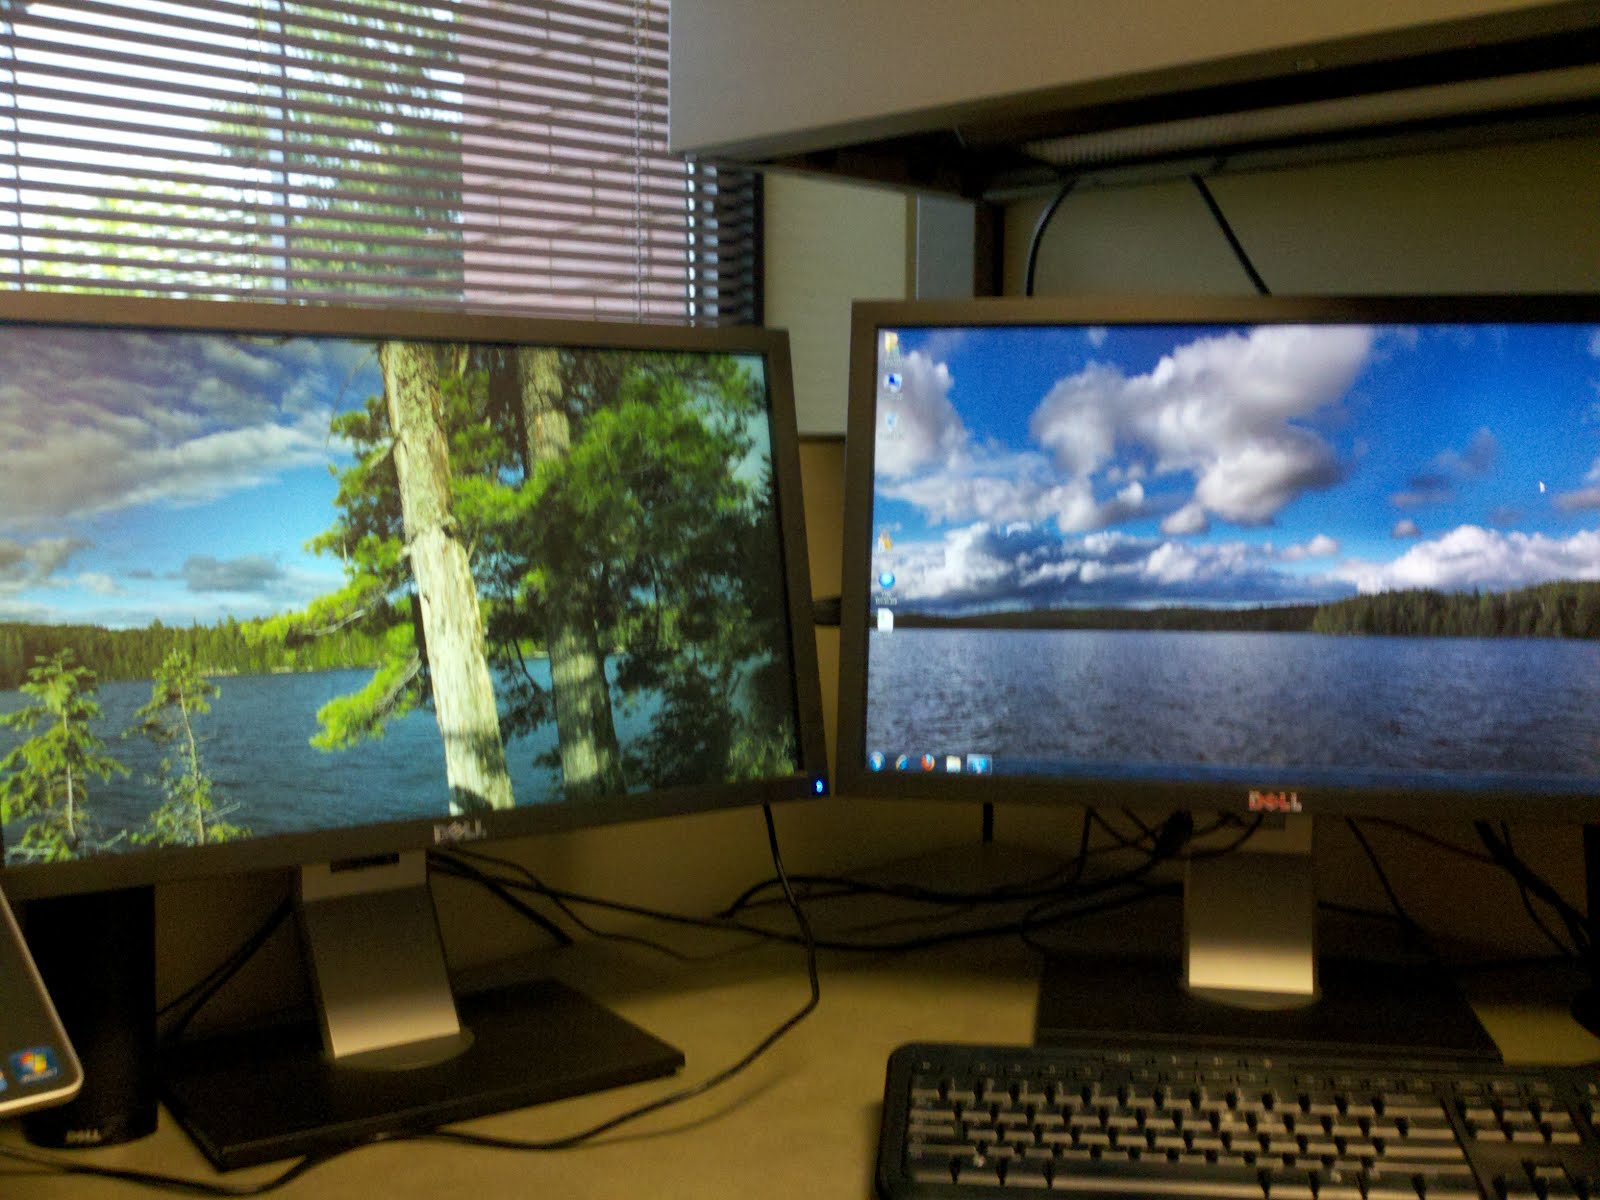 Spot Windows Dual Monitor Extend Wallpaper Across Monitors